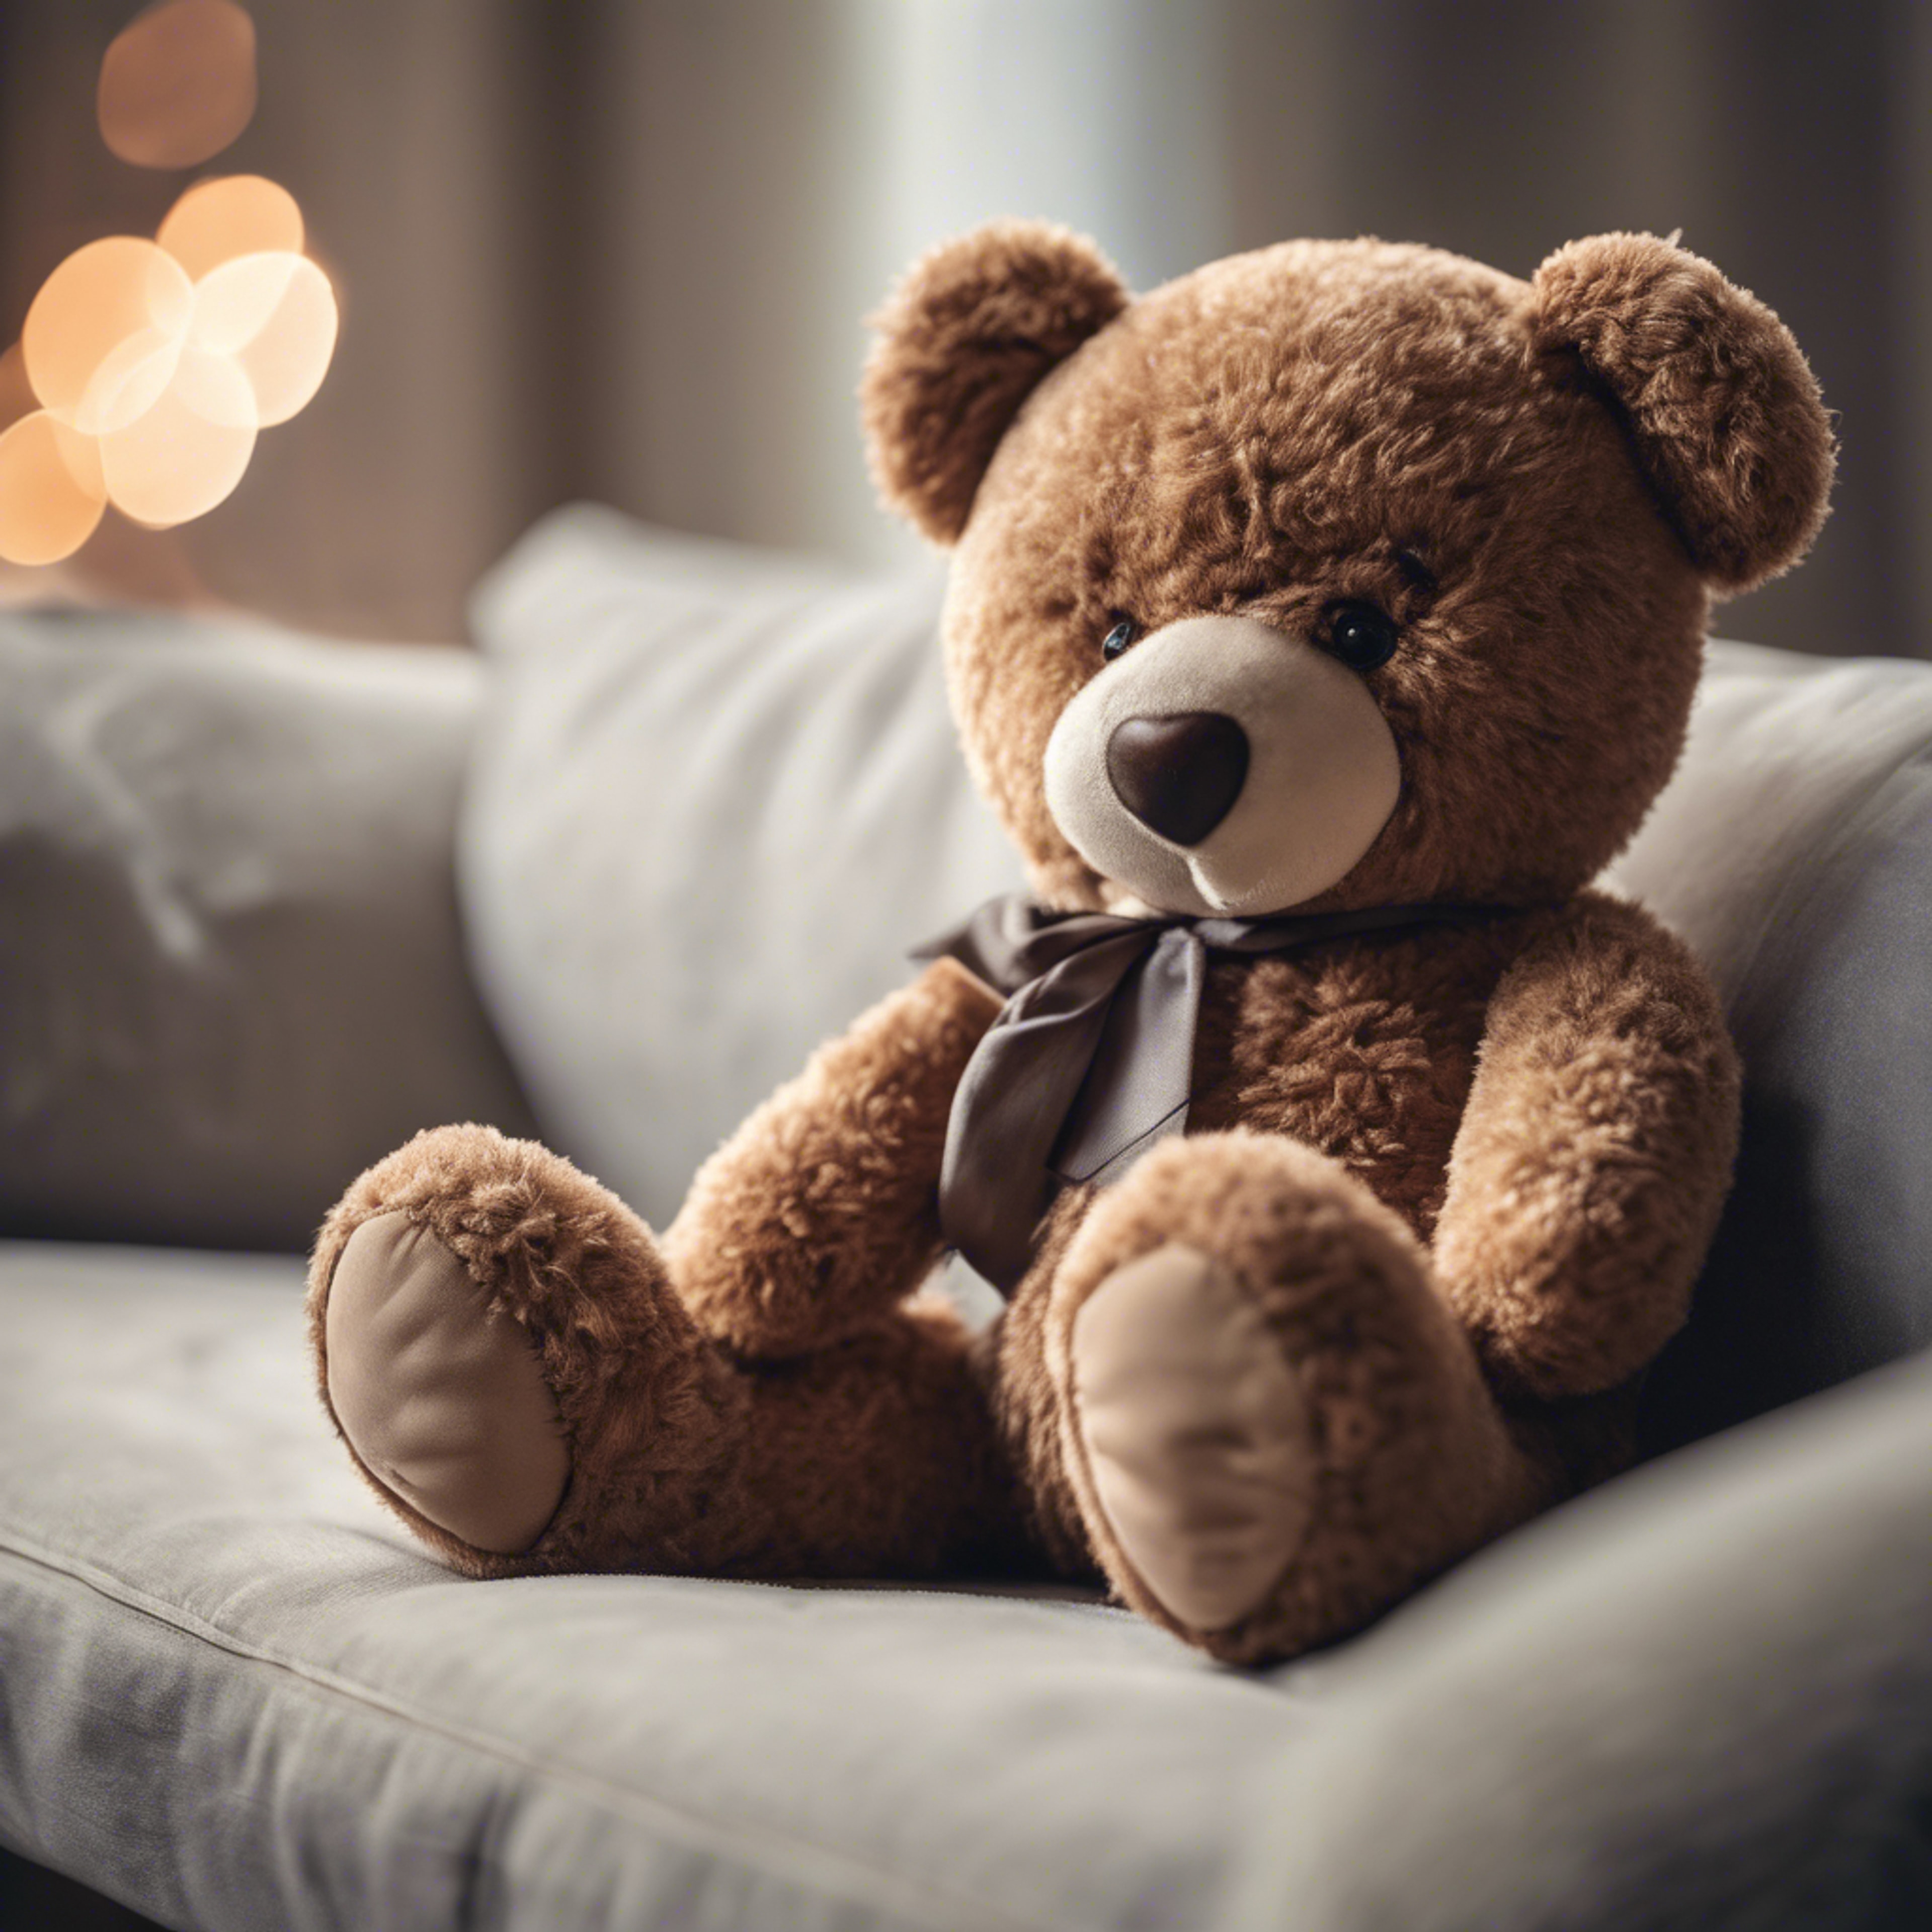 A soft teddy bear holding a brown, heart-shaped cushion. ផ្ទាំង​រូបភាព[e840707edcb14c4d8997]